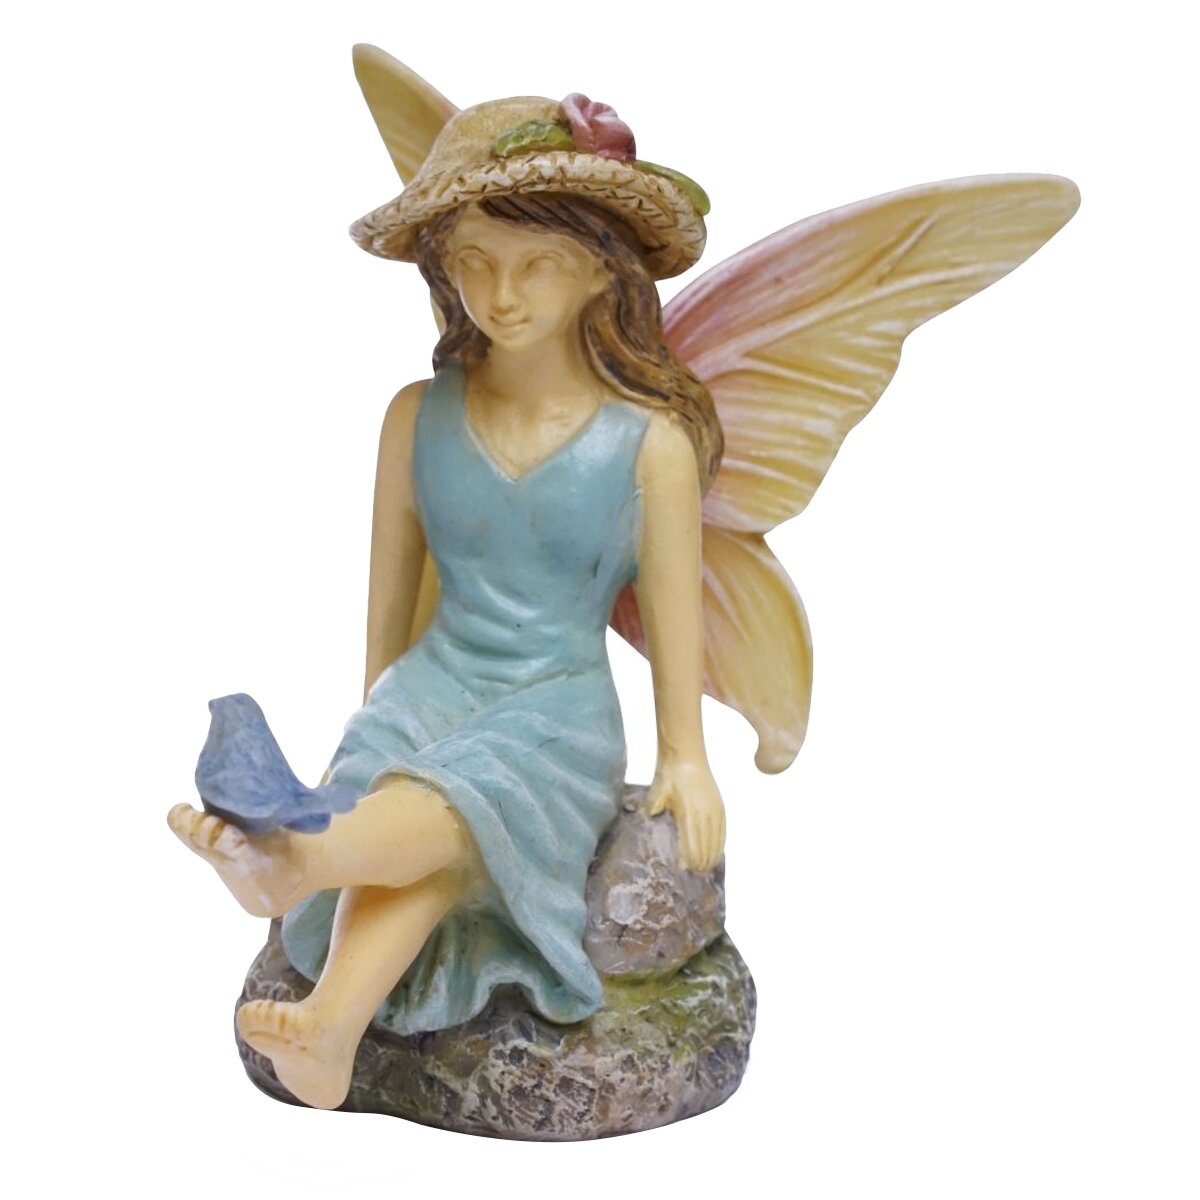 Little Girl Wings Miniature Fairy Garden Accessory Figurine Dollhouse Ornament 